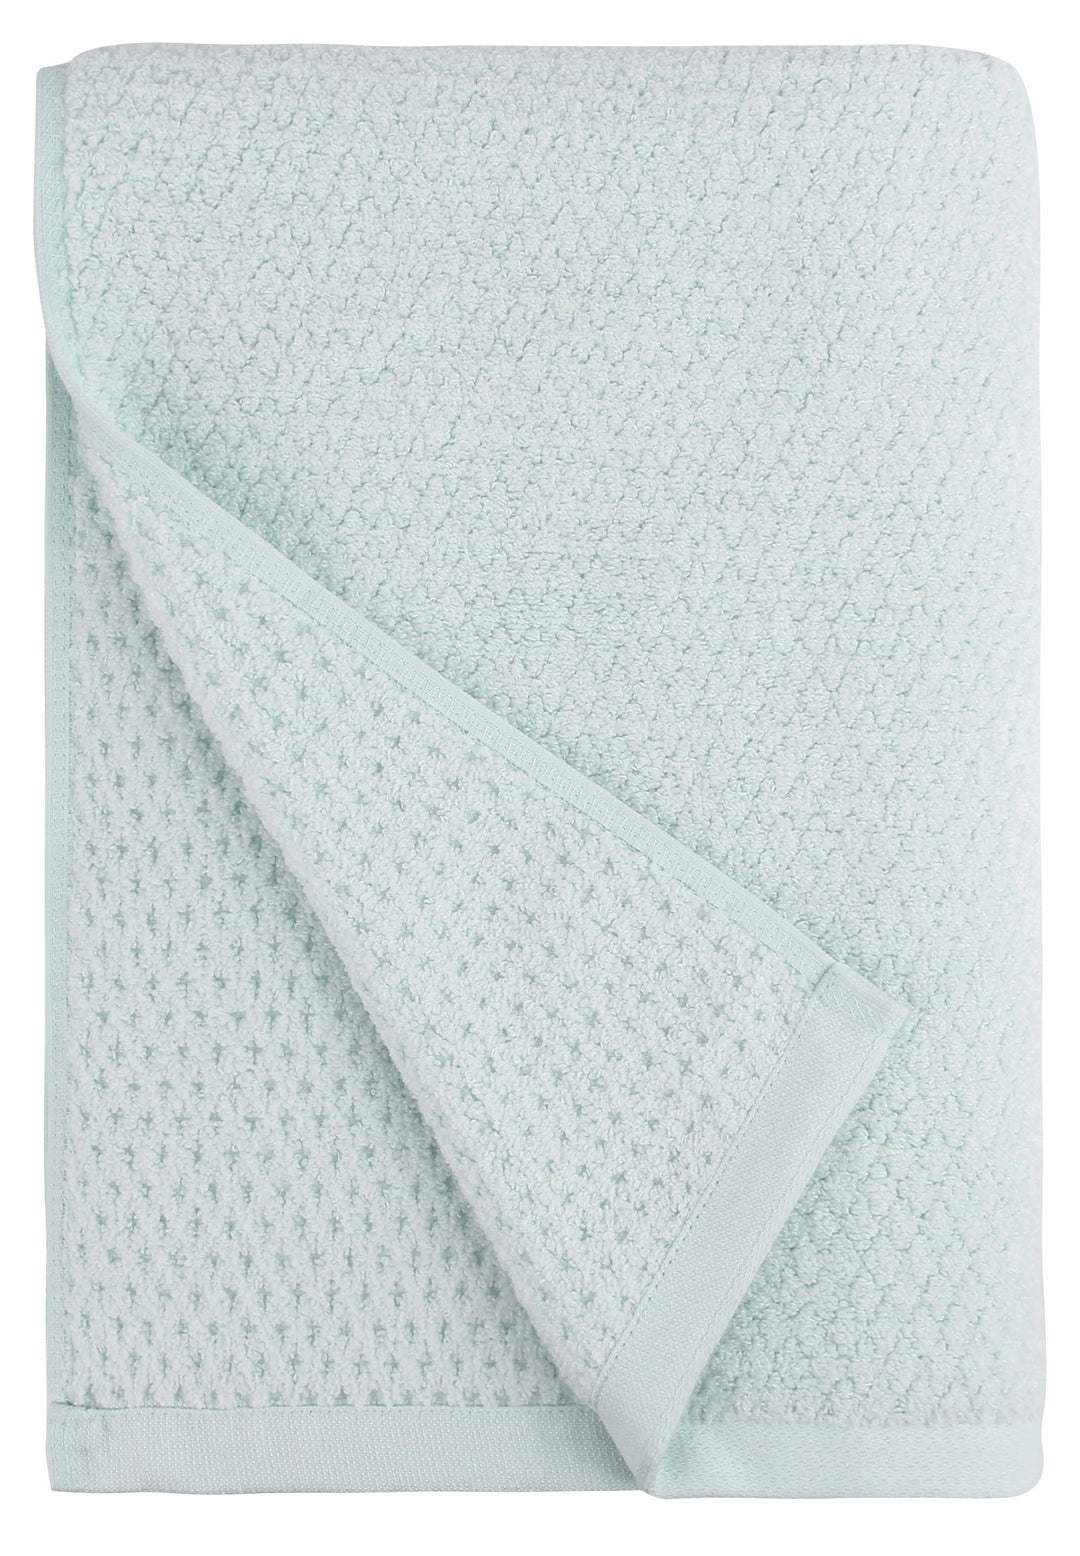 Diamond Jacquard Towels, Bath Towel - 2 Pack, Spearmint